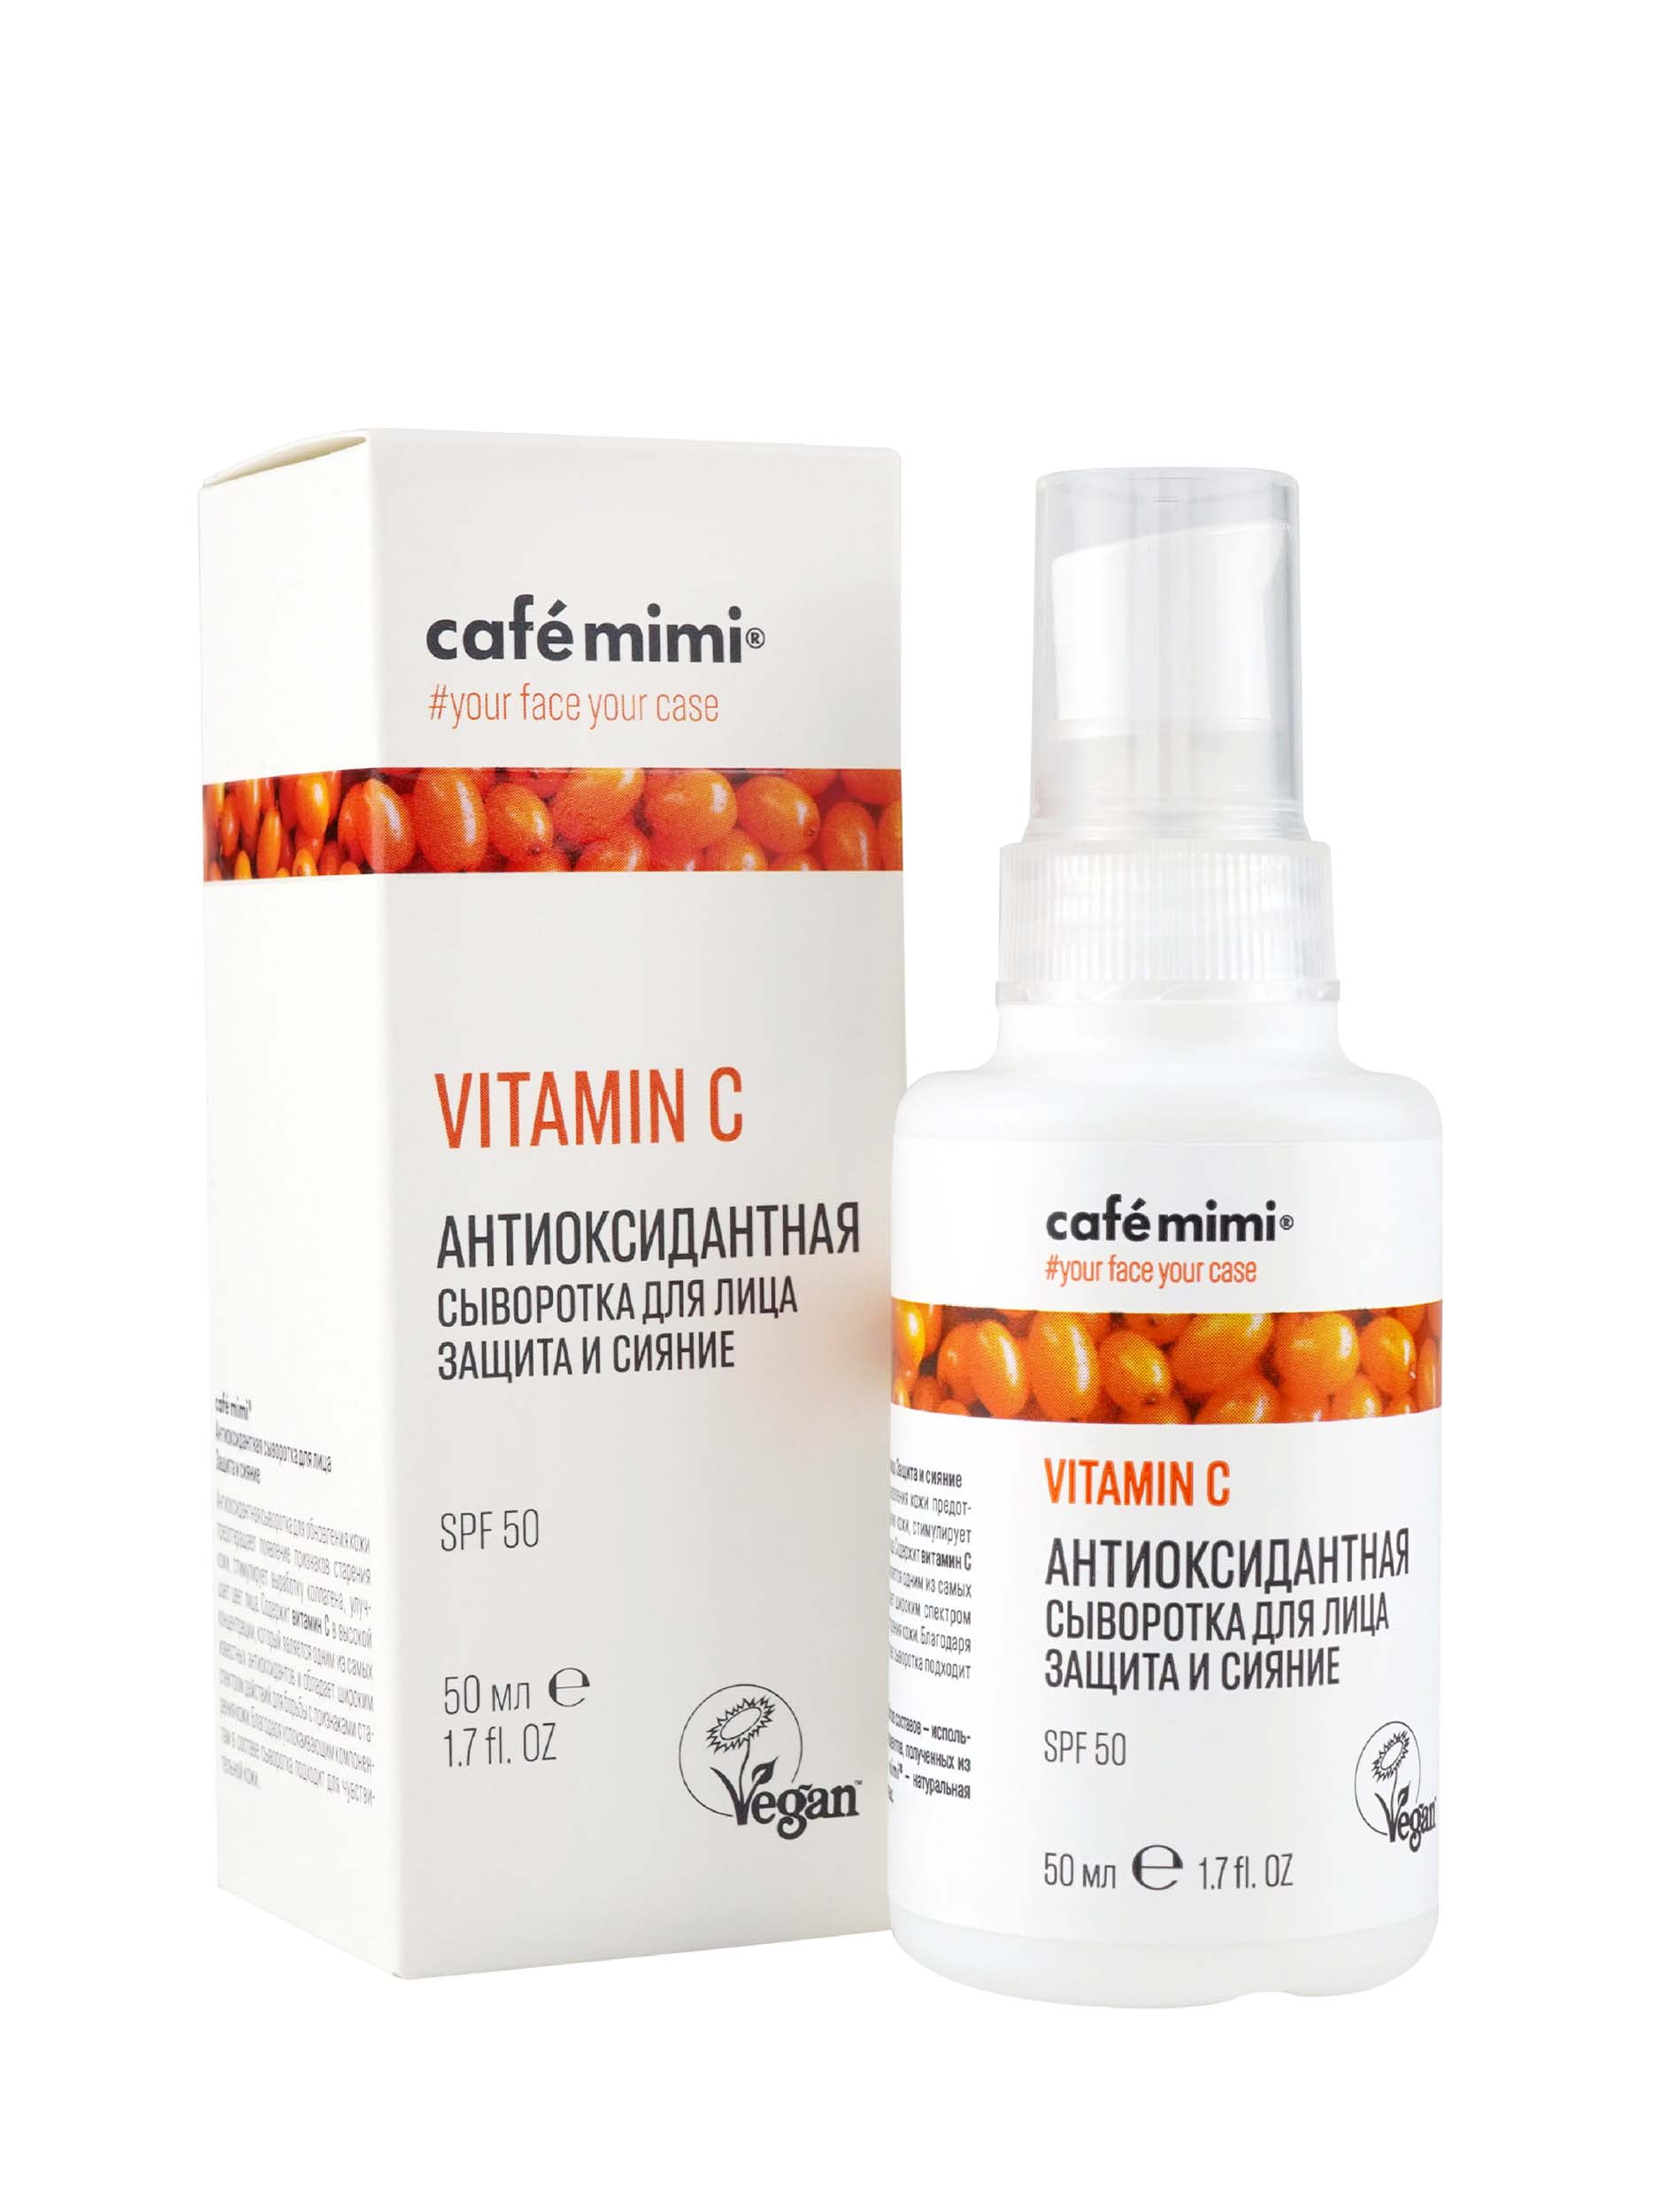 Антиоксидантная сыворотка для лица Защита и сияние Cafe mimi Vitamin C, 50 мл